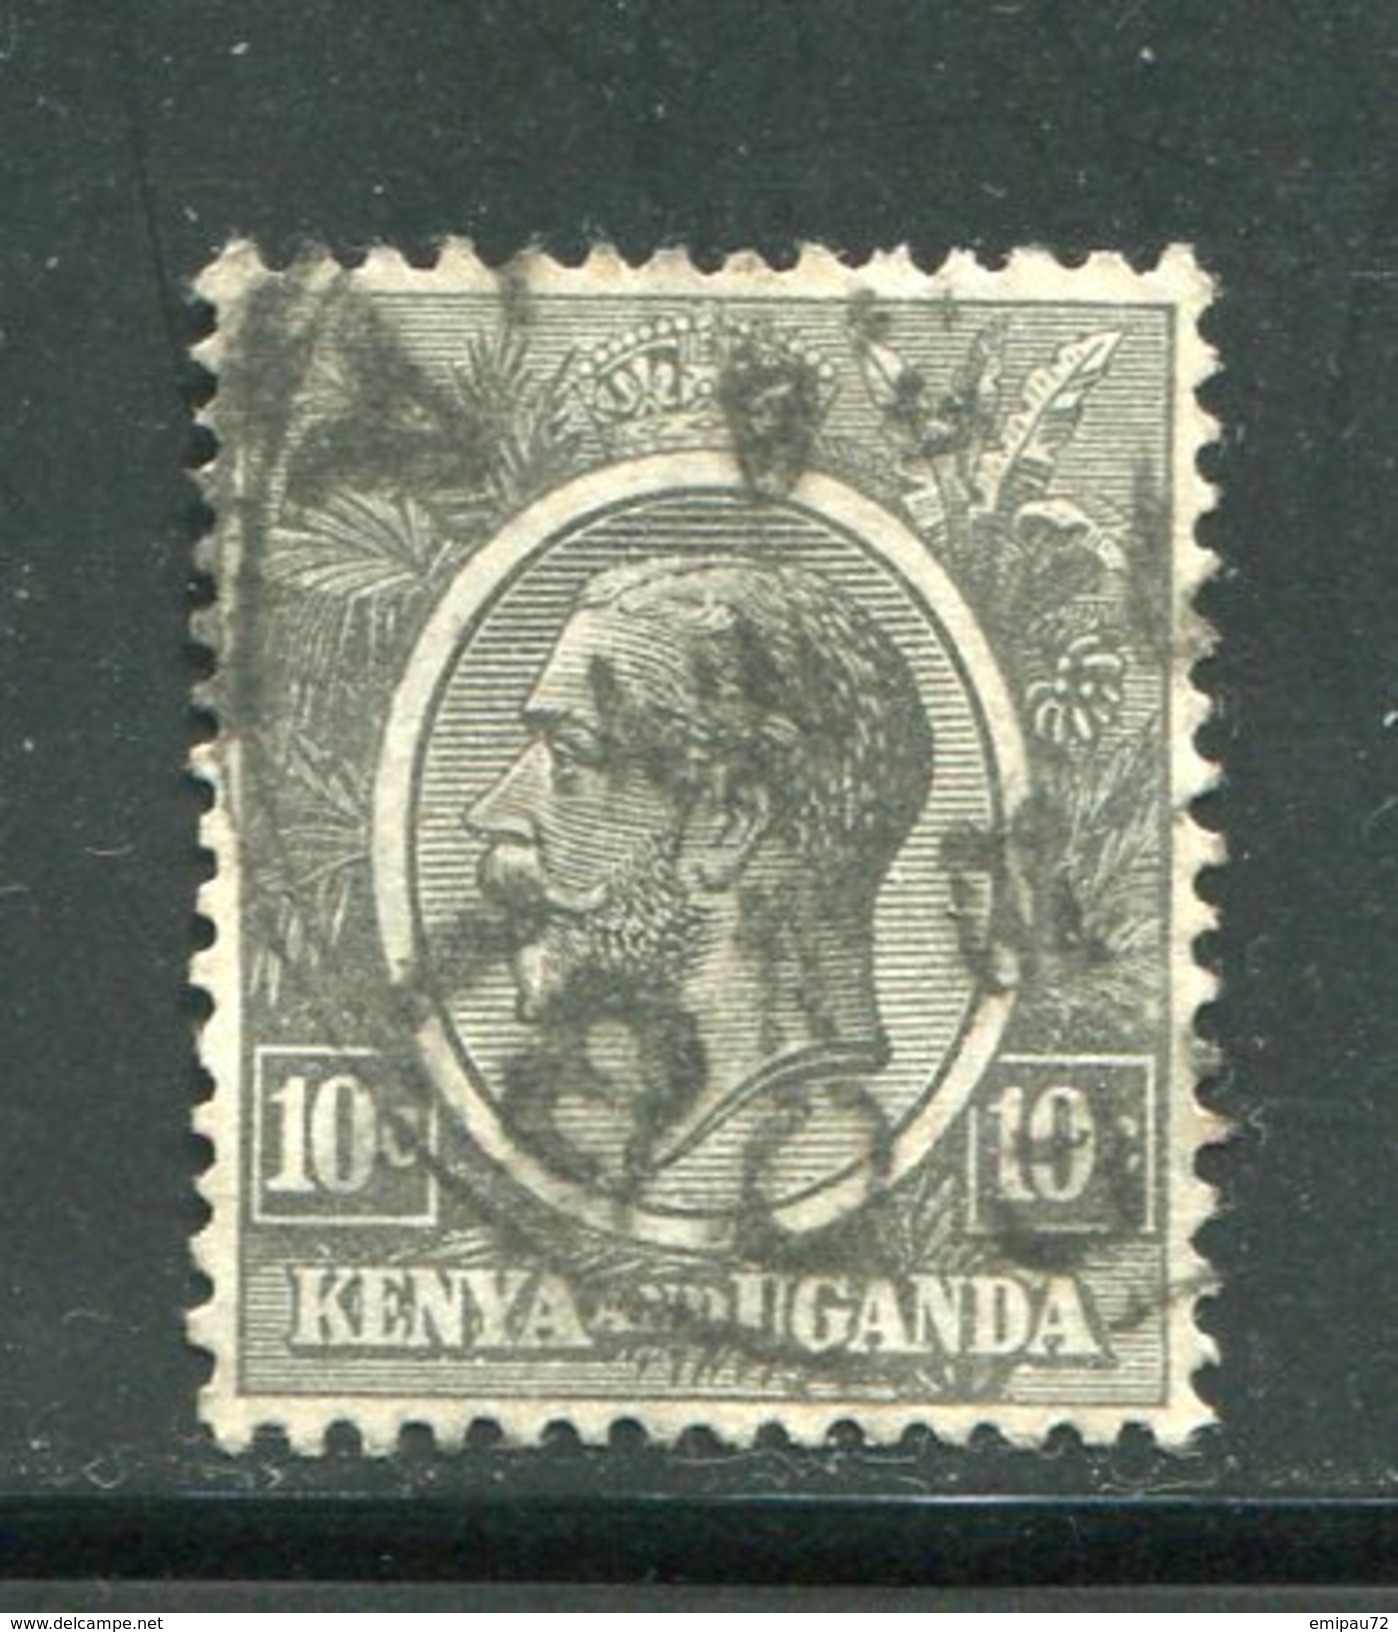 KENYA Et OUGANDA- Y&T N°3A- Oblitéré - Kenya & Ouganda